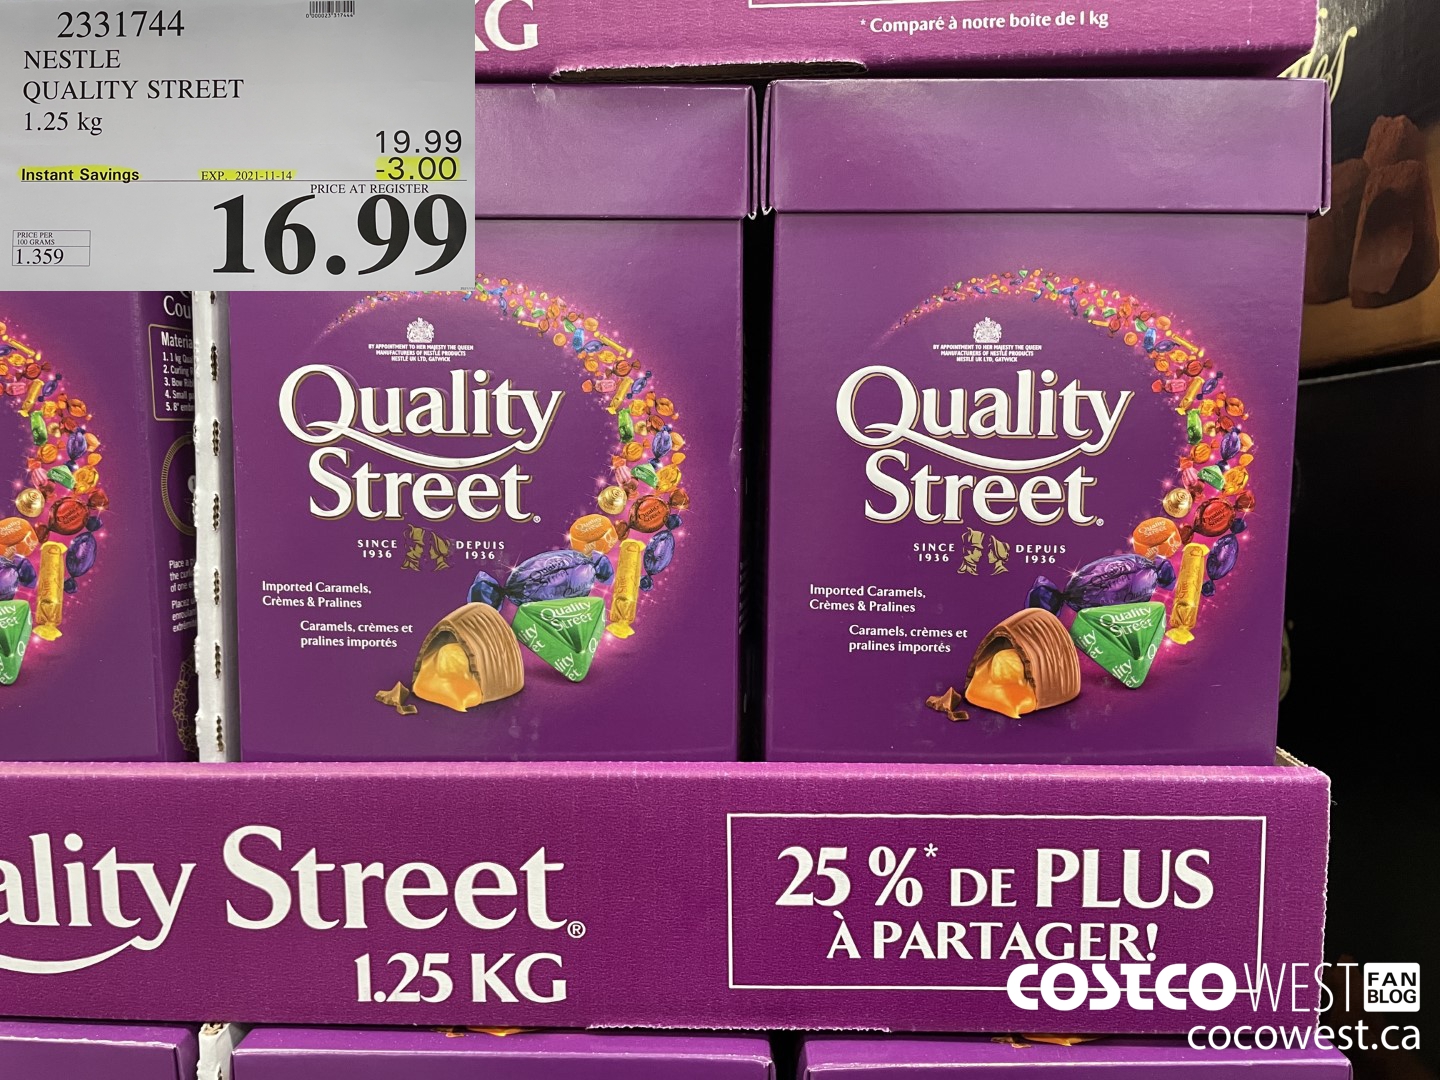 Nestlé Quality Street, 1.25 kg